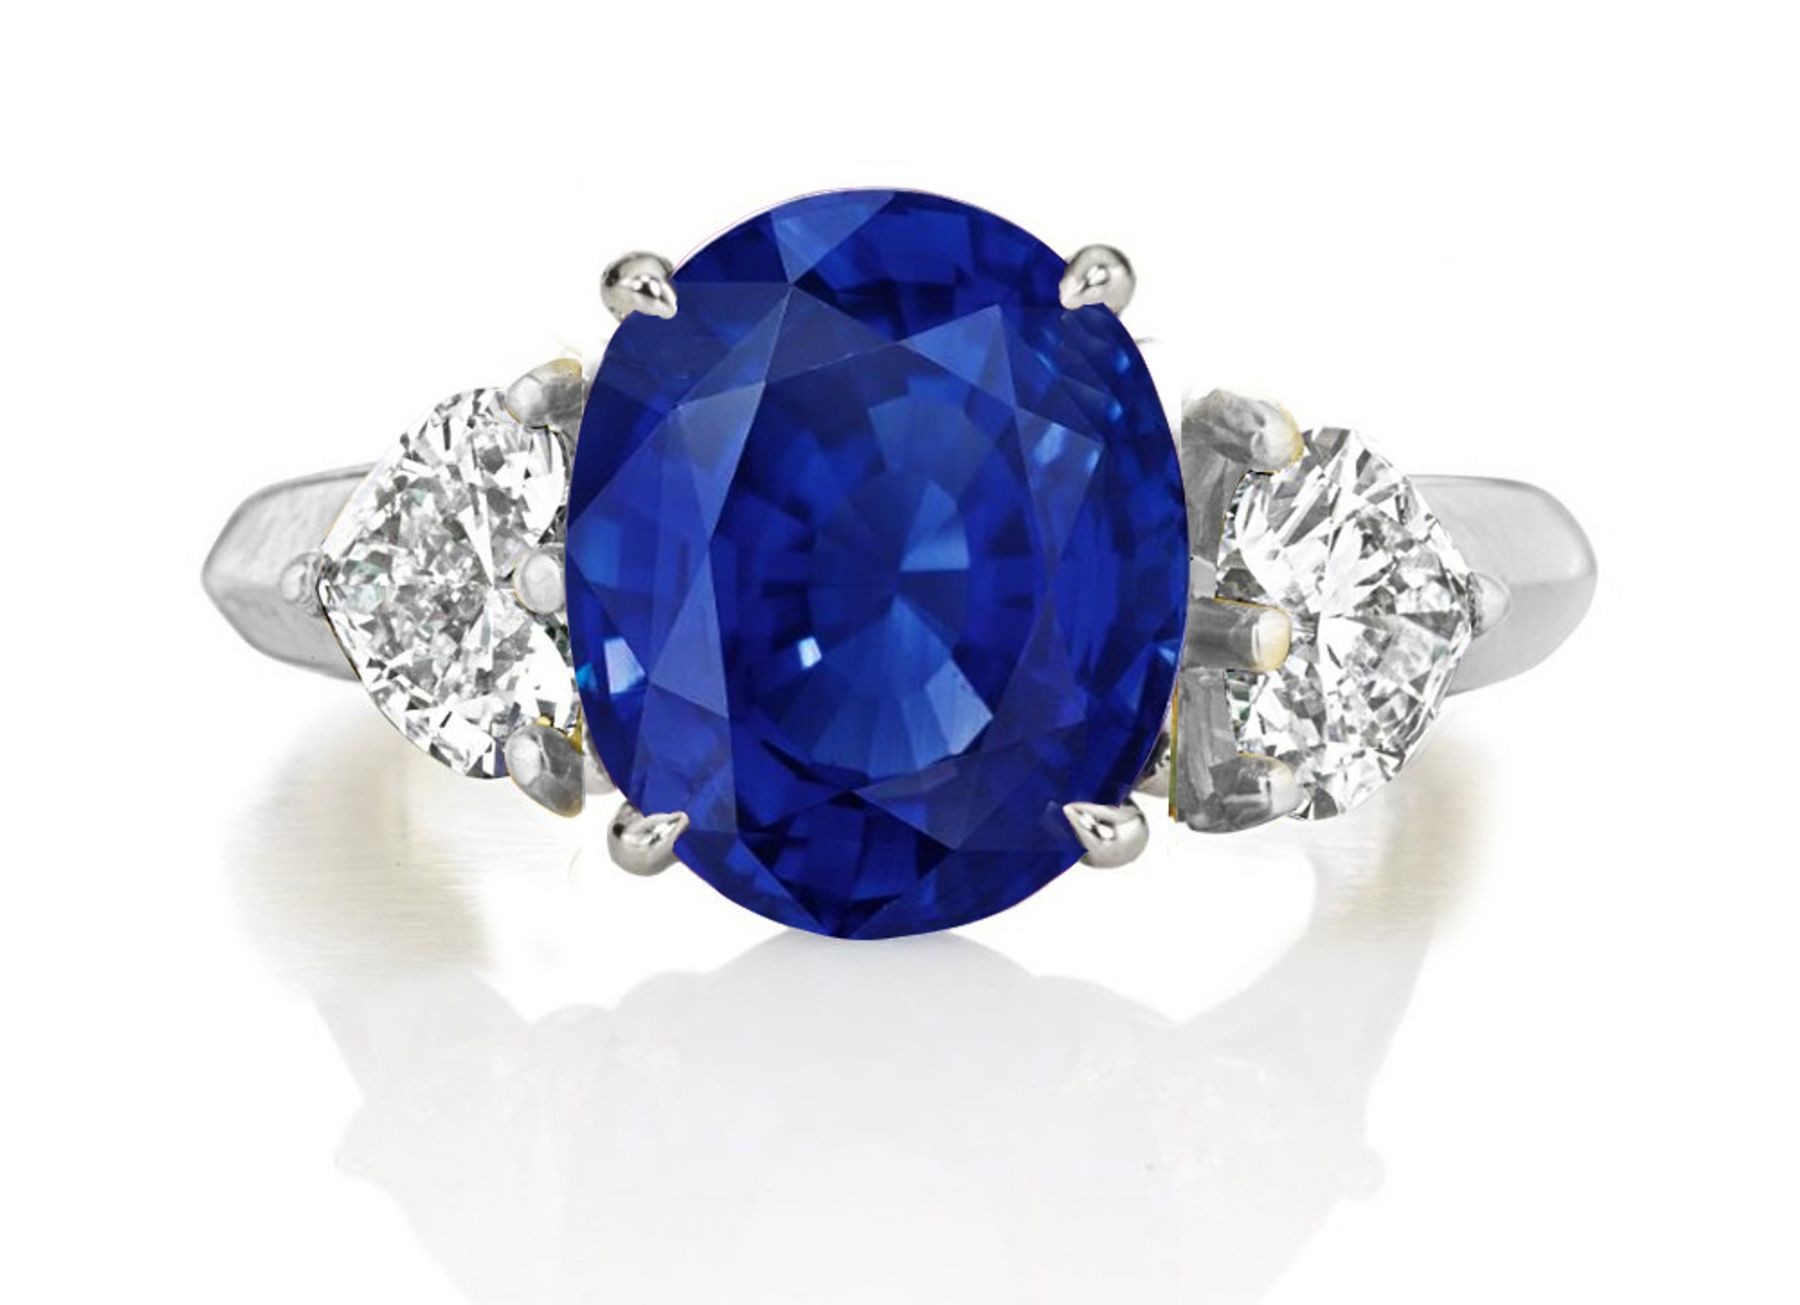 Premium Quality Unique Heart Shaped Diamonds & Blue Sapphire Oval Three Stone Rings